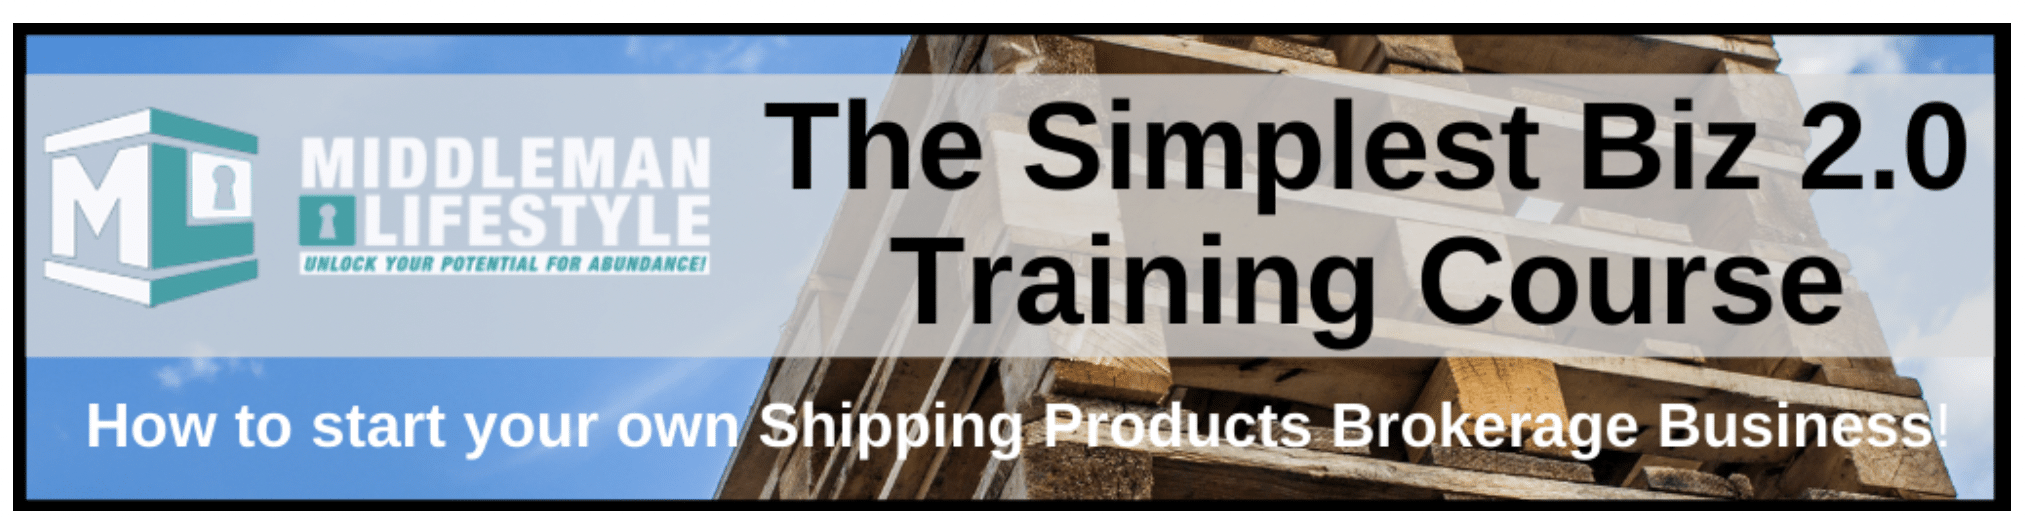 Simplest Biz Training Course